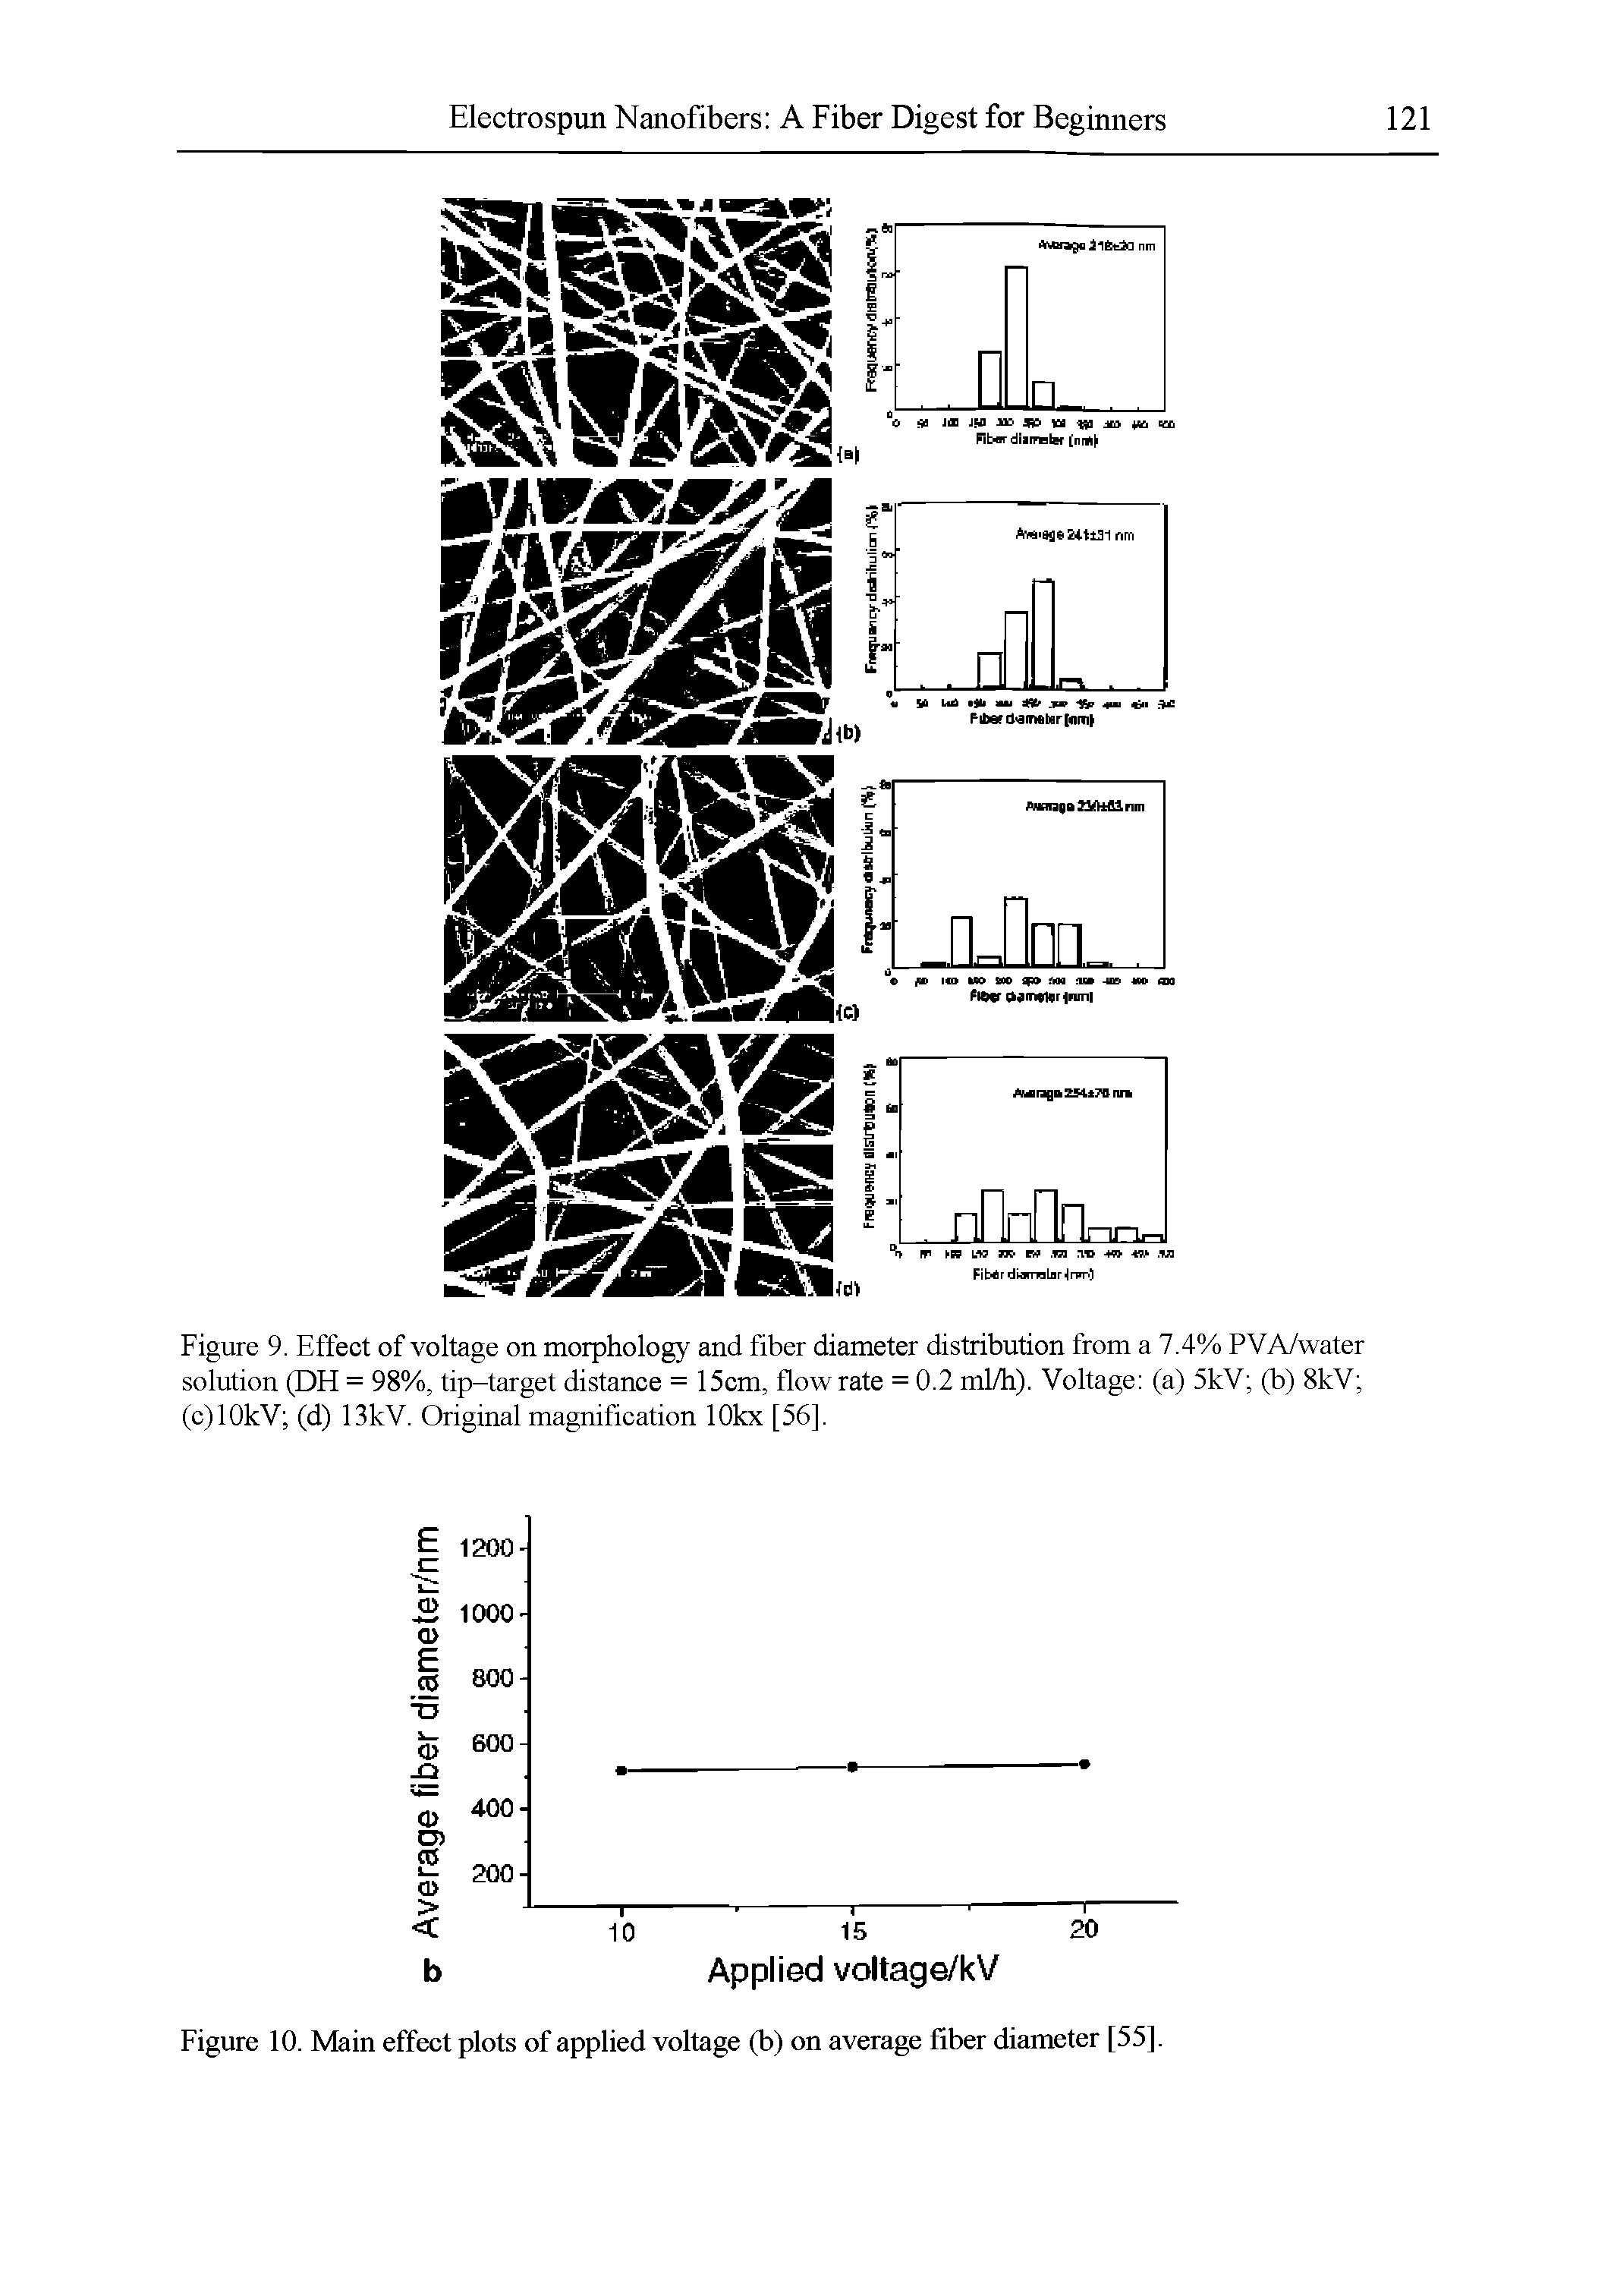 Figure 10. Main effect plots of applied voltage (b) on average fiber diameter [55].